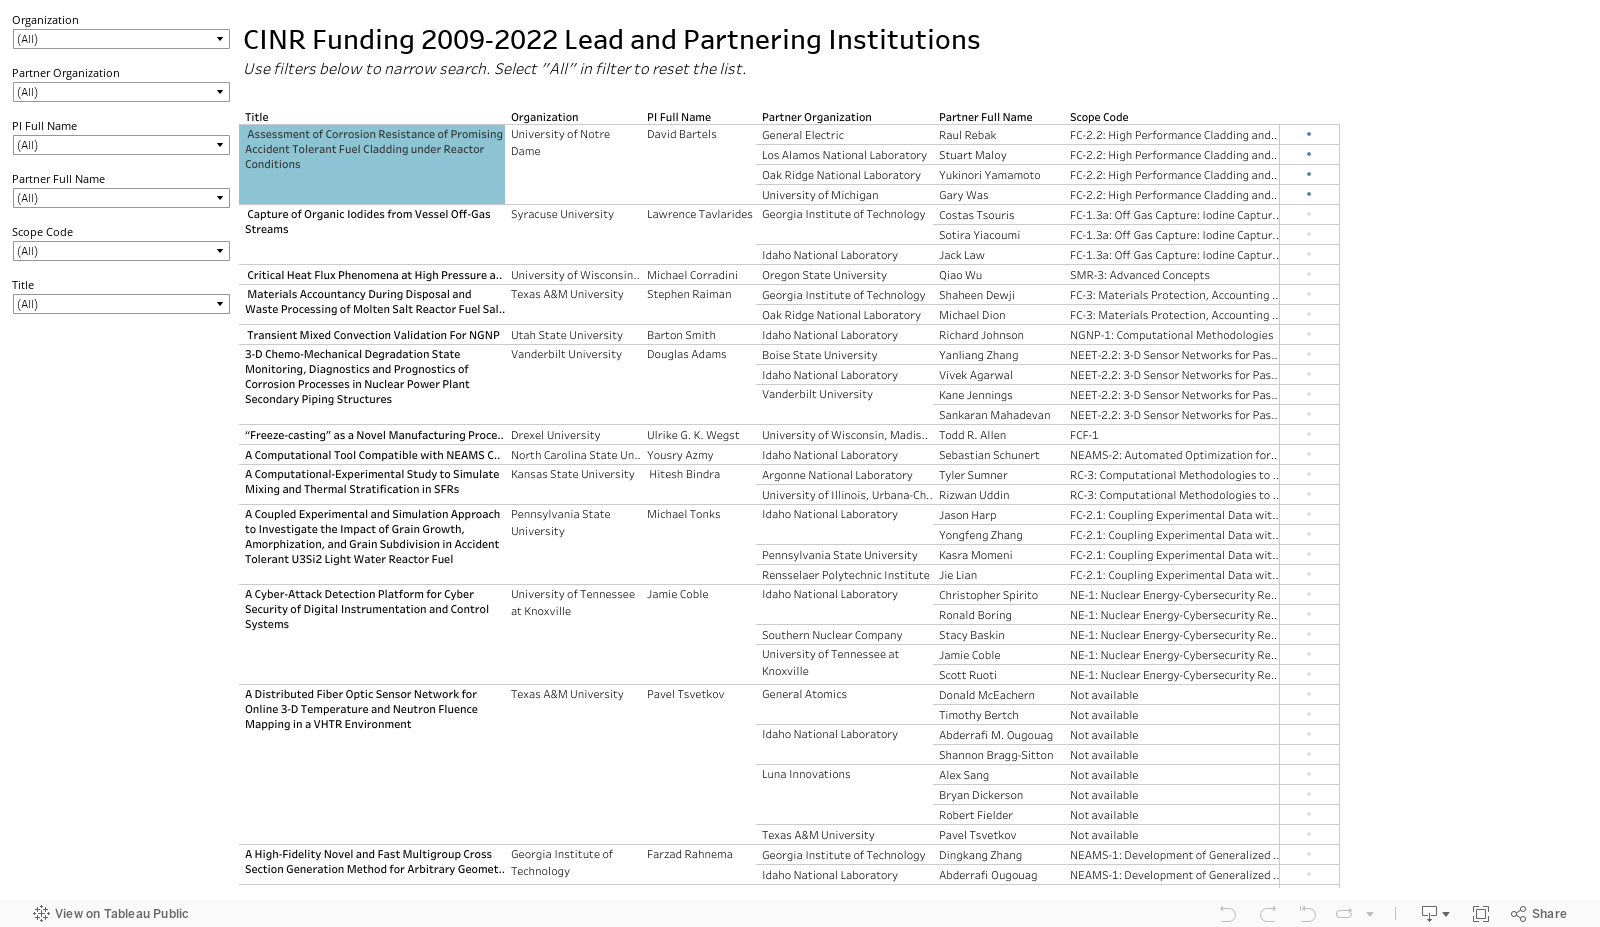 List CINR Funding 2009-2022 